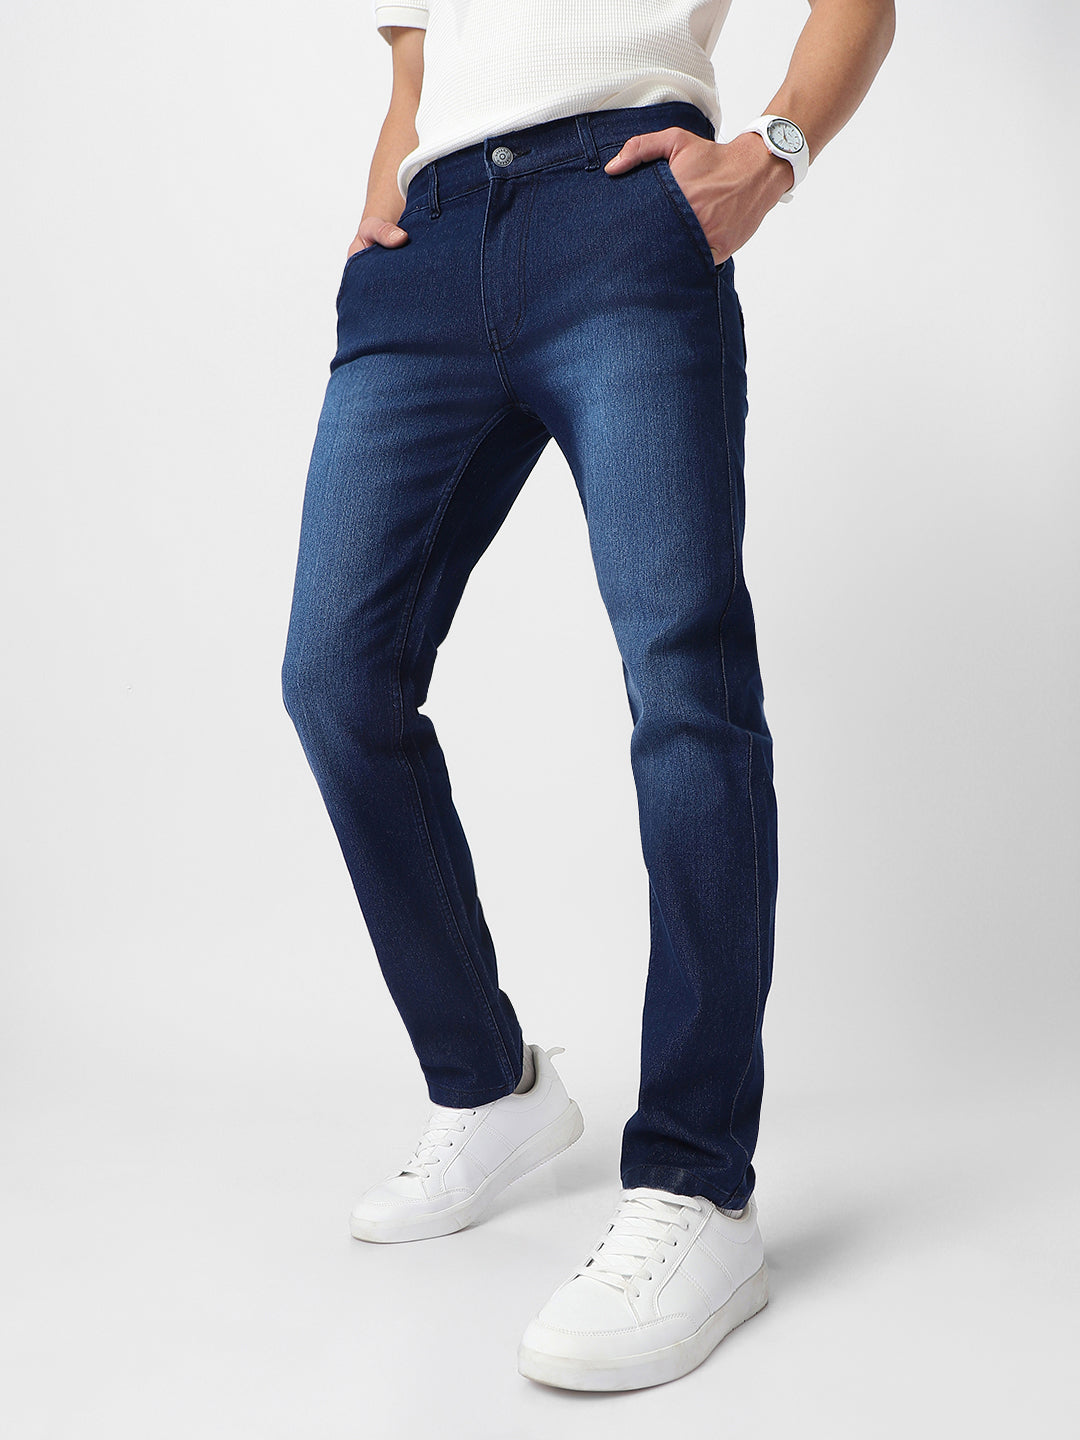 Urbano Fashion Men's Dark Blue Regular Fit Washed Jeans Stretchable